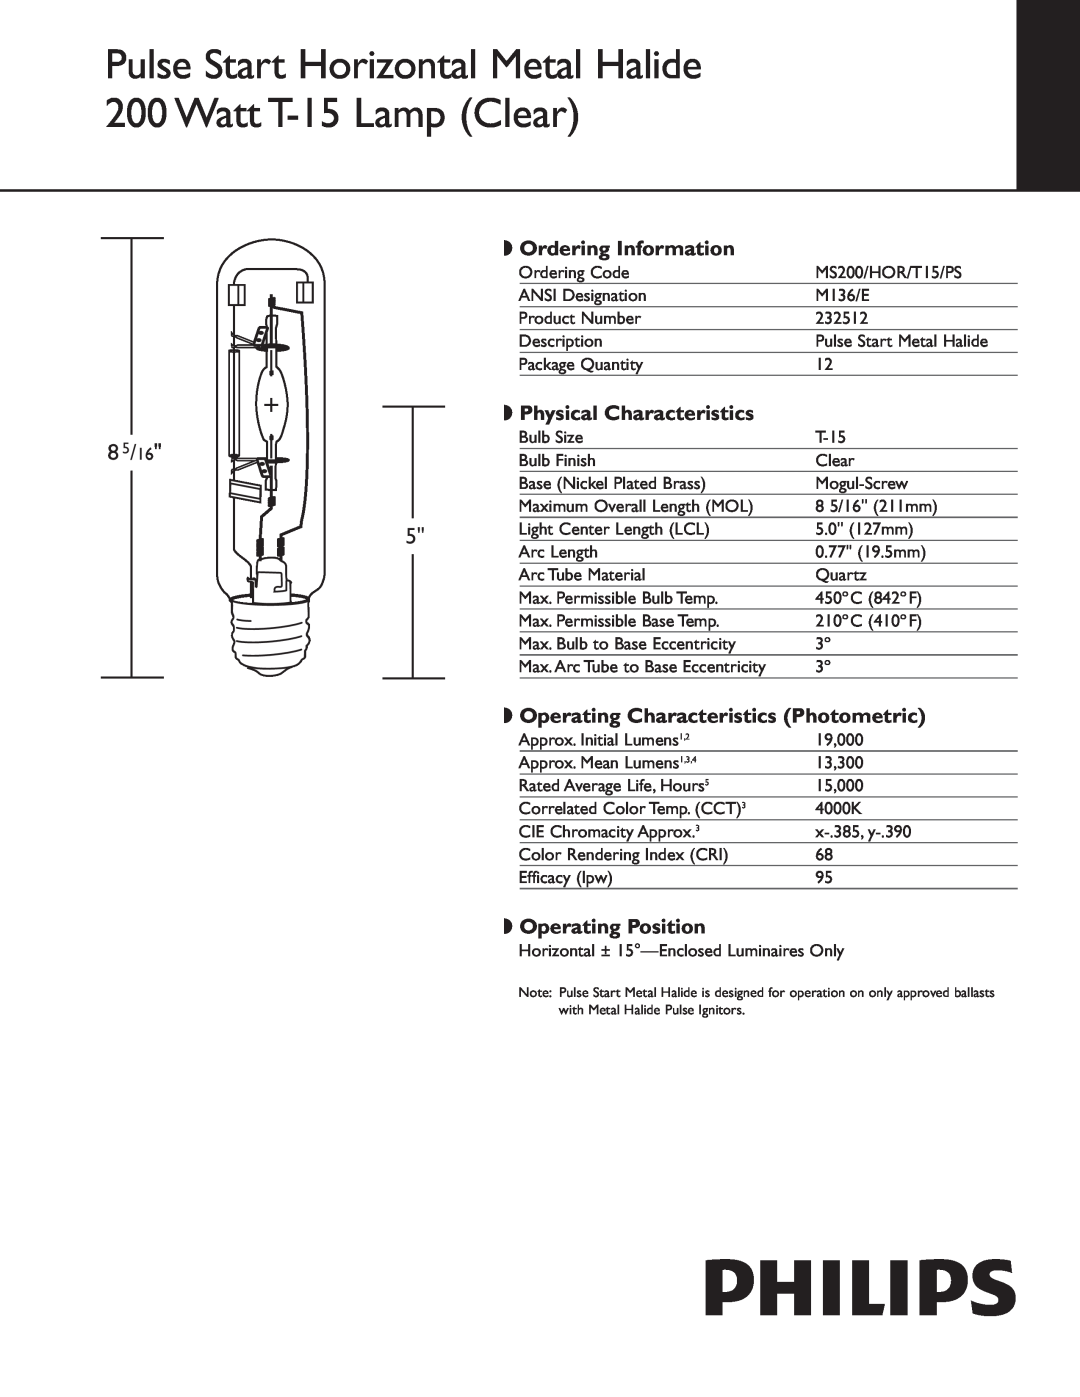 Philips 232512 manual 8 5/16, Ordering Information, Physical Characteristics, Operating Characteristics Photometric 